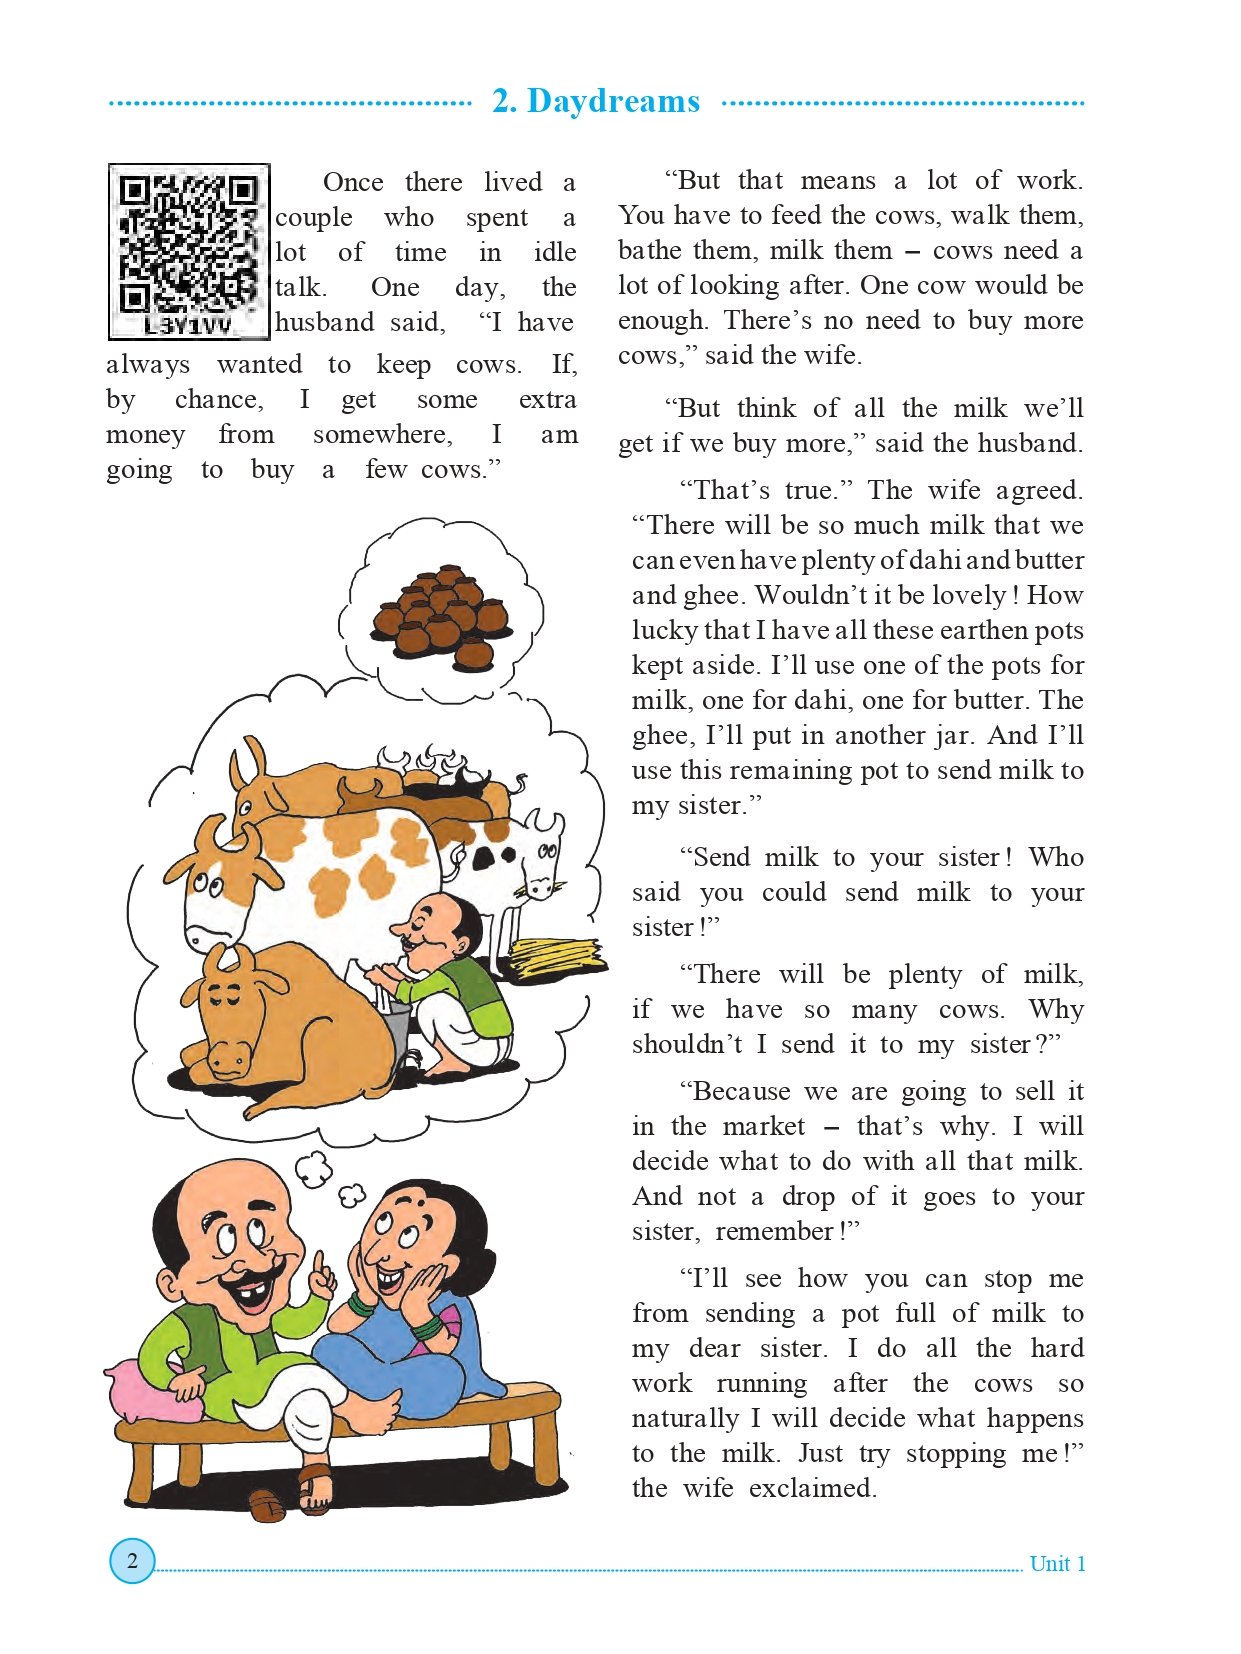 maharashtra-board-5th-standard-english-book-pdf